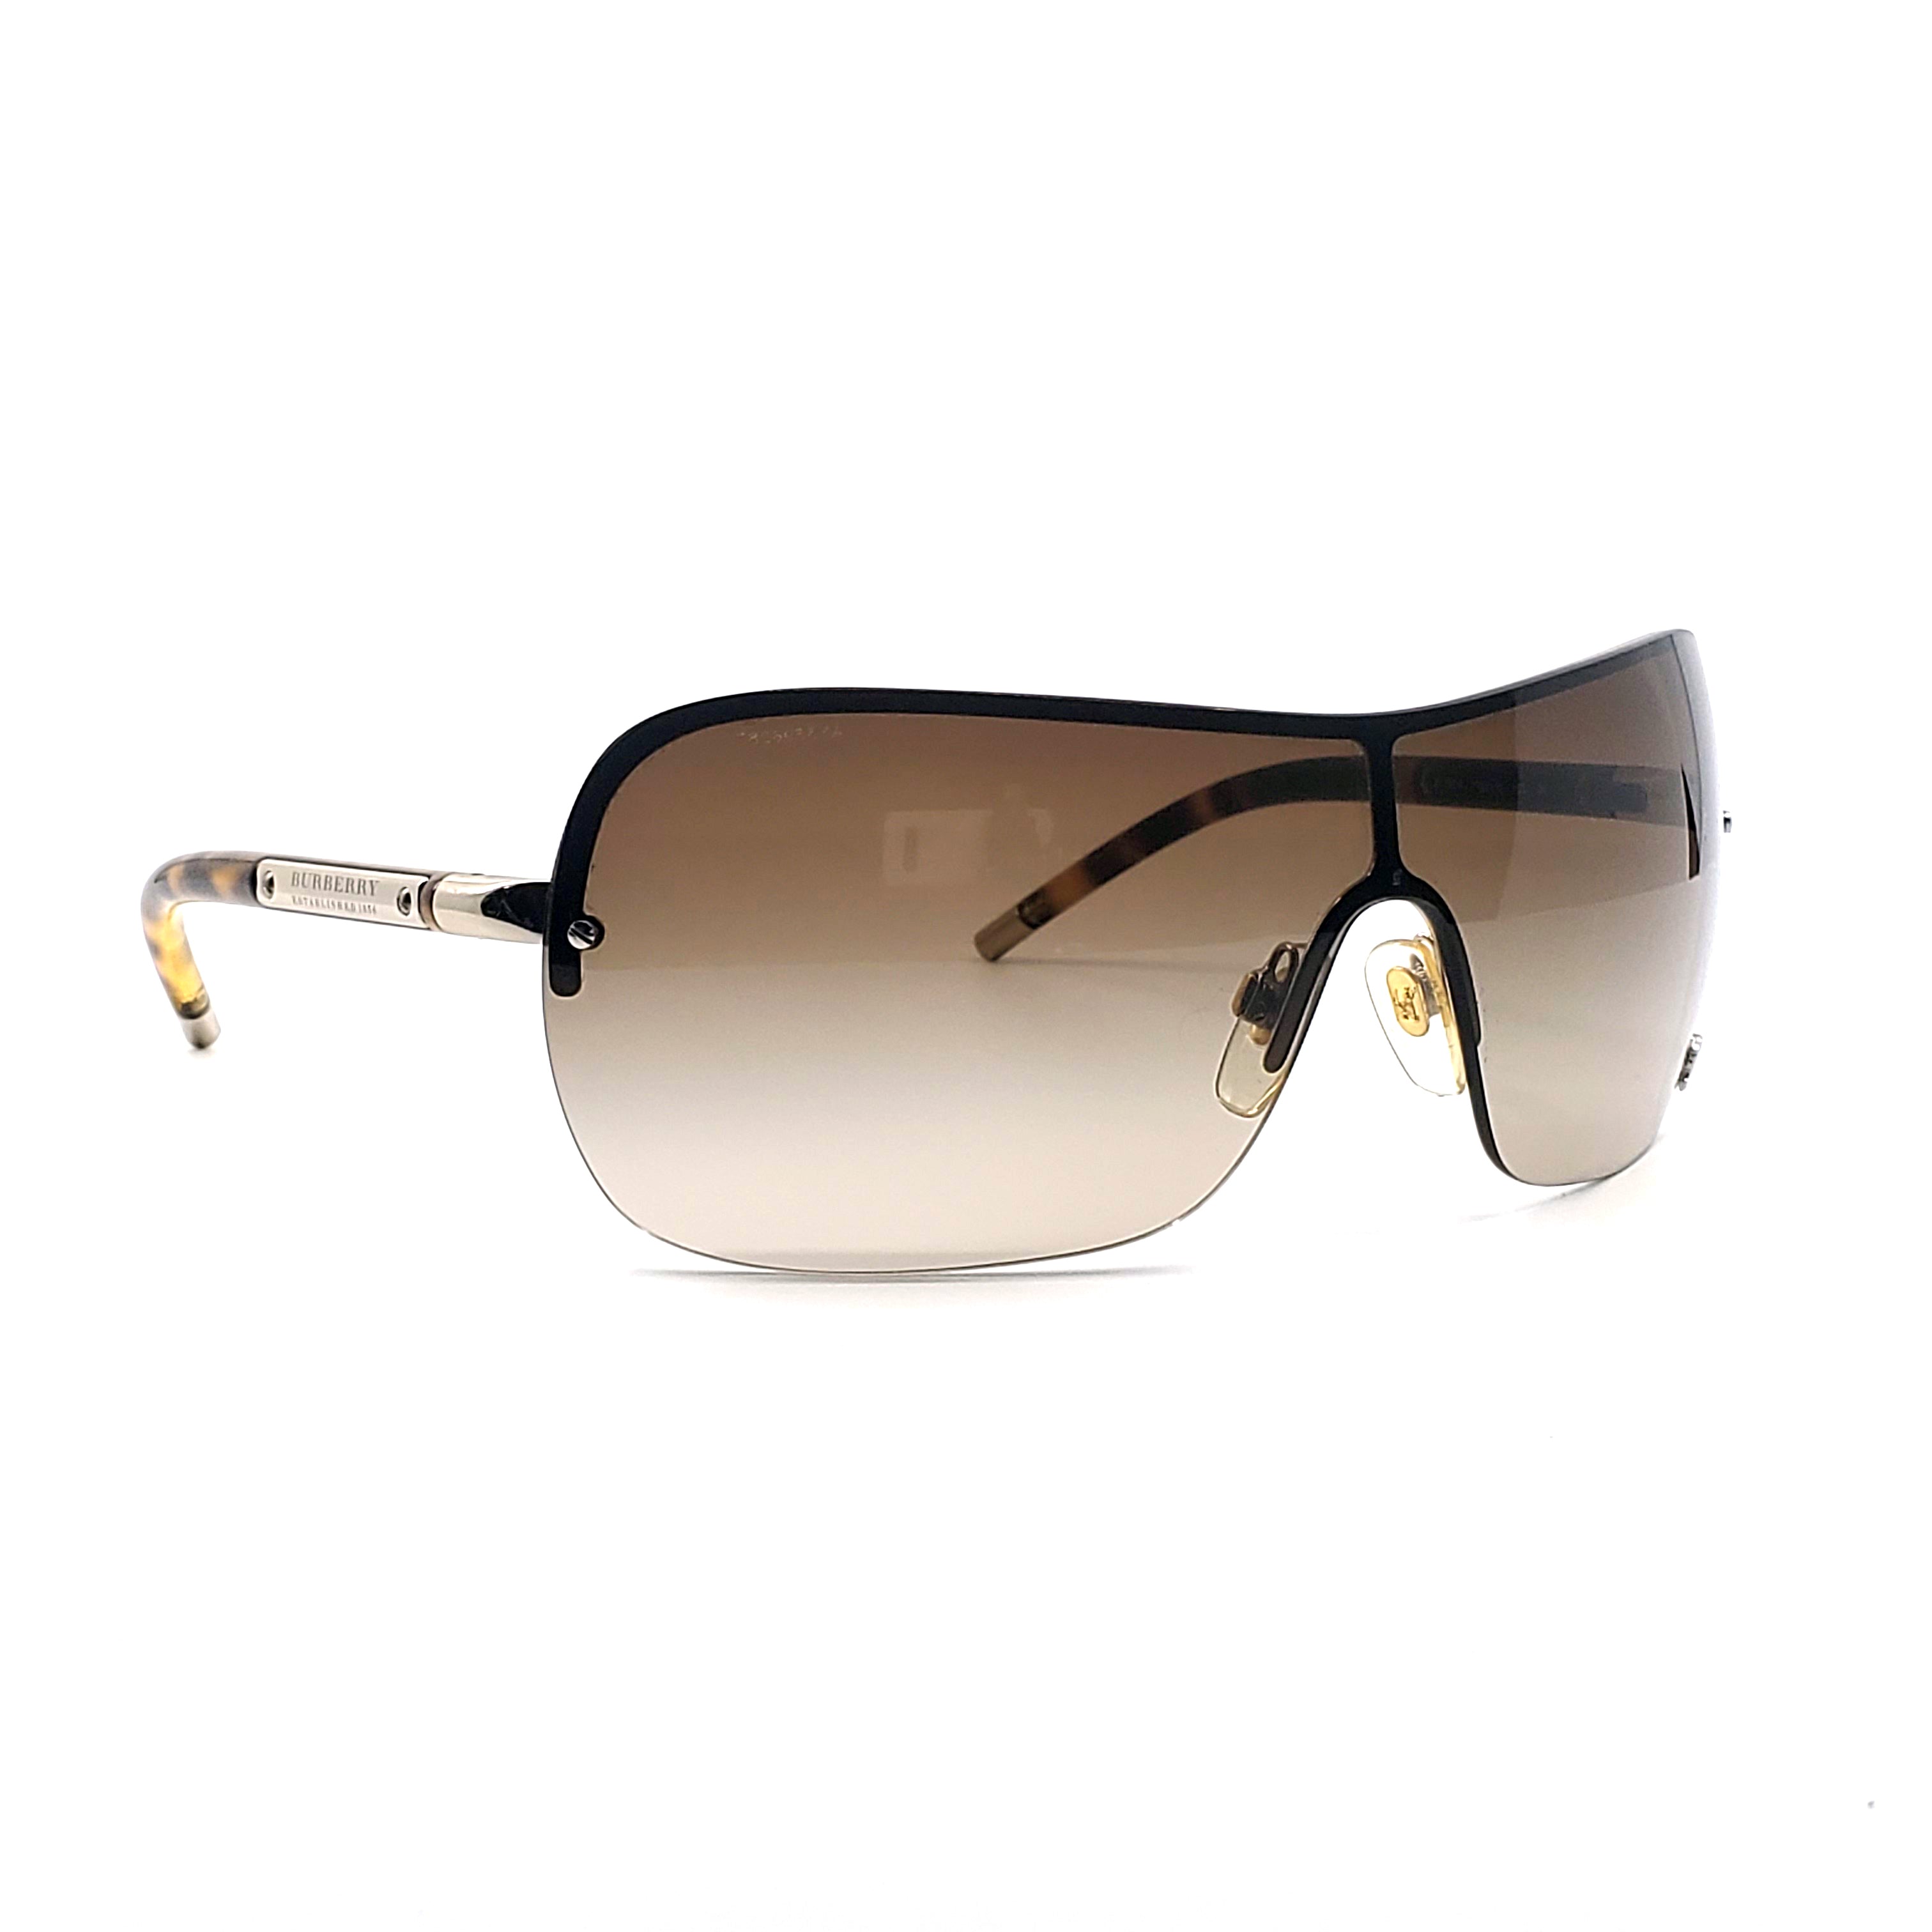 Burberry Shield Sunglasses - B3033